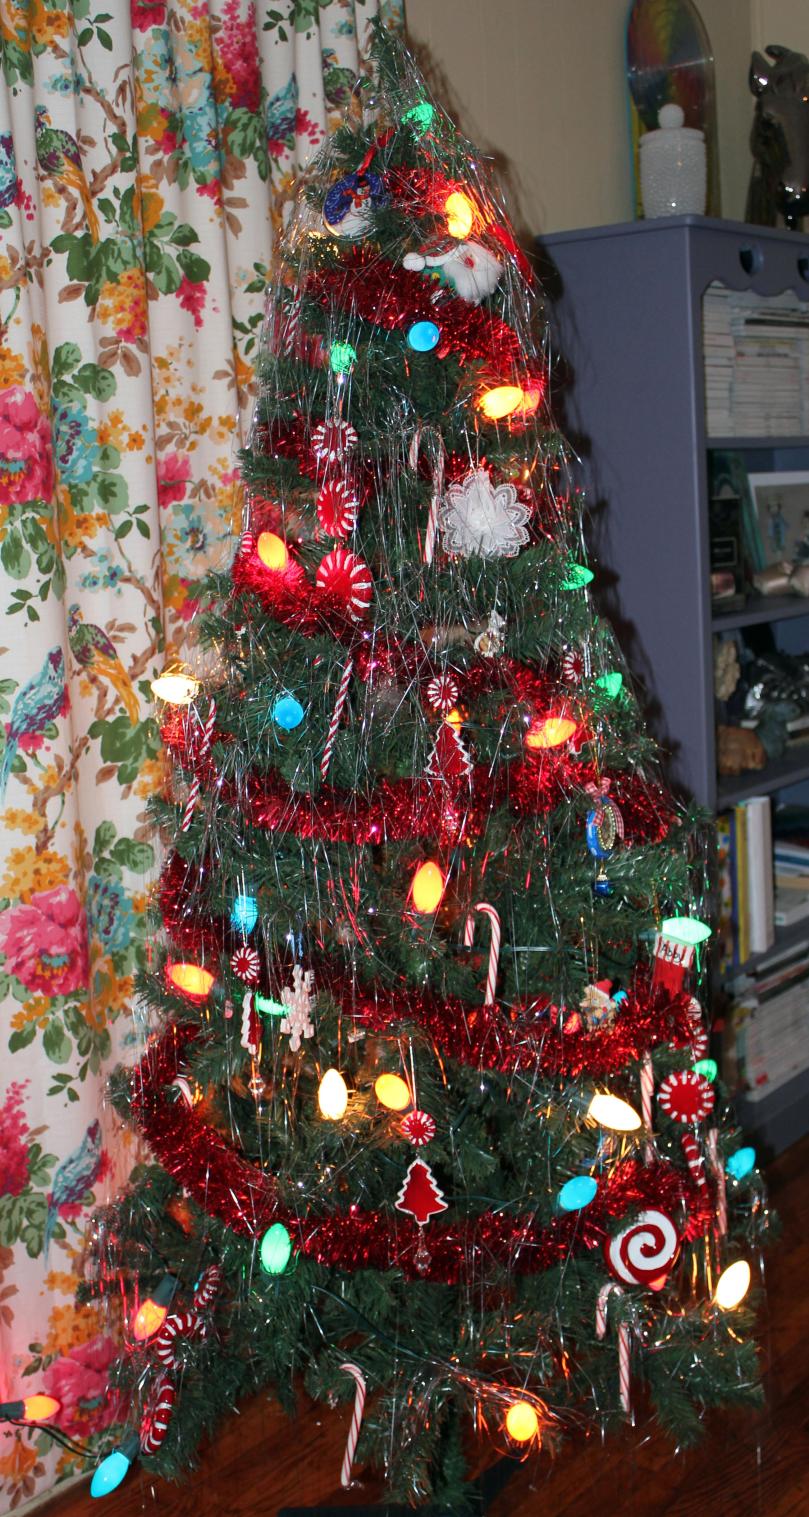 My purposefully-tacky Christmas tree *wink* 